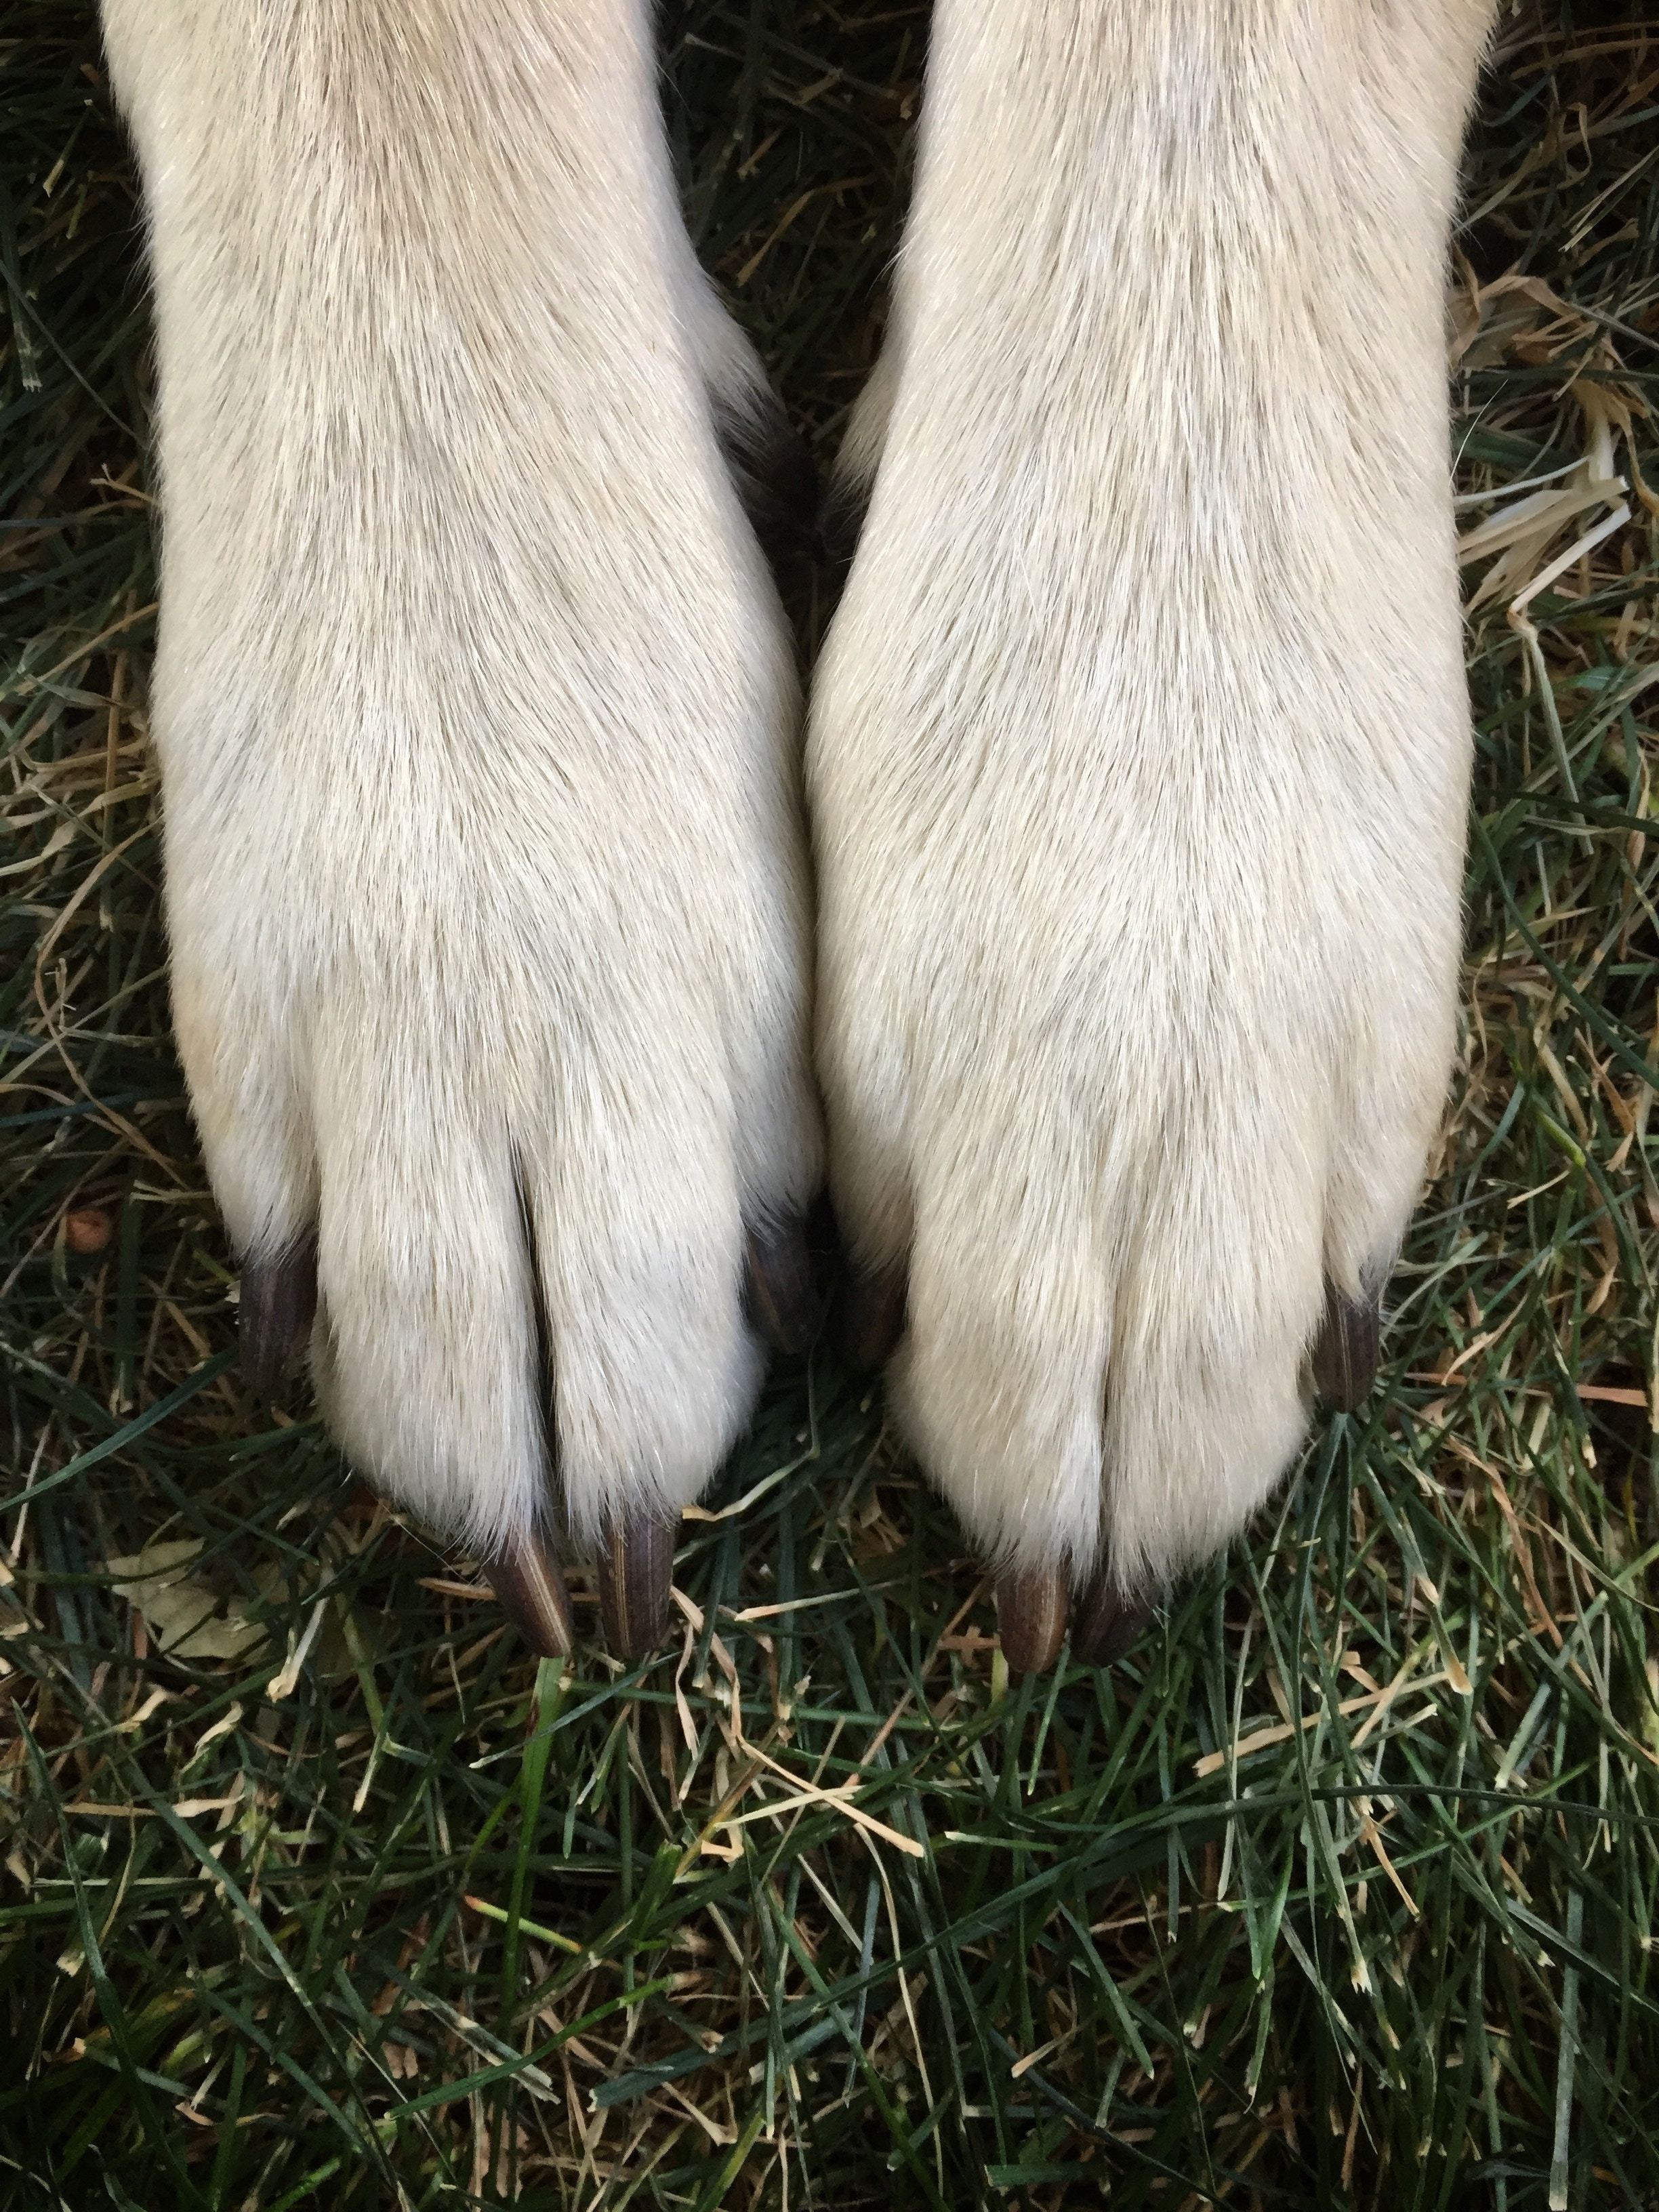 Broken nails in dogs | FirstVet